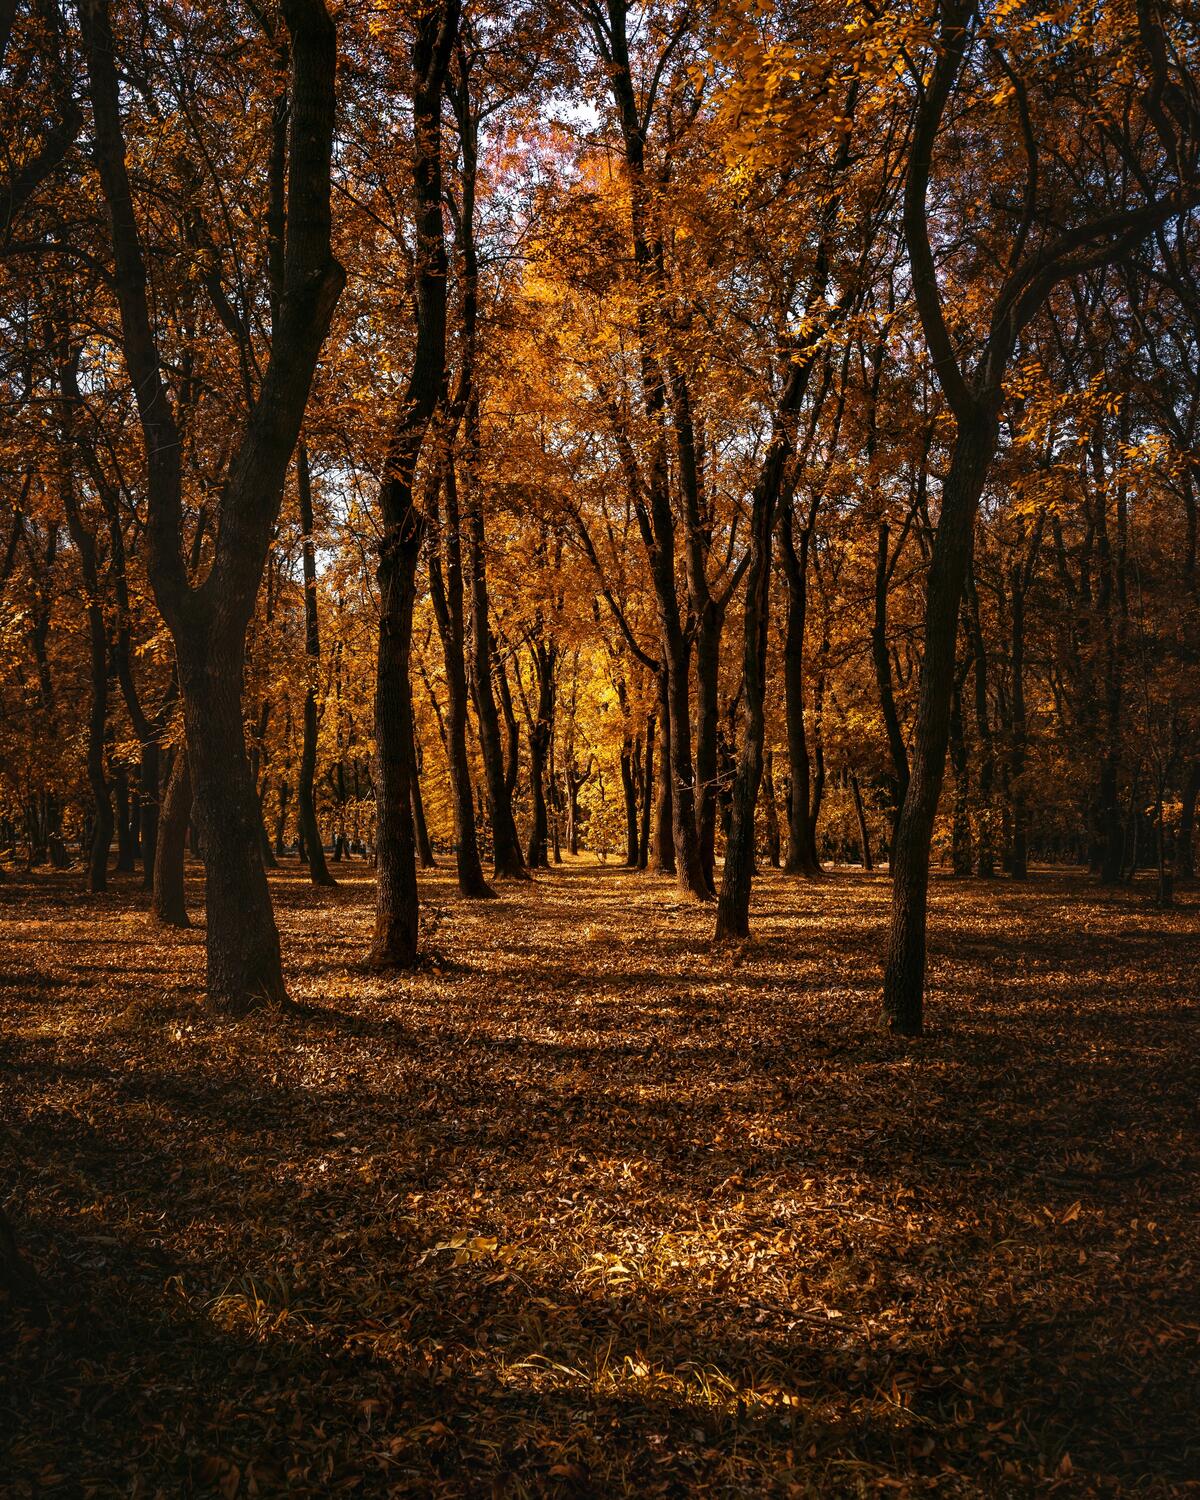 A walk along the fall path